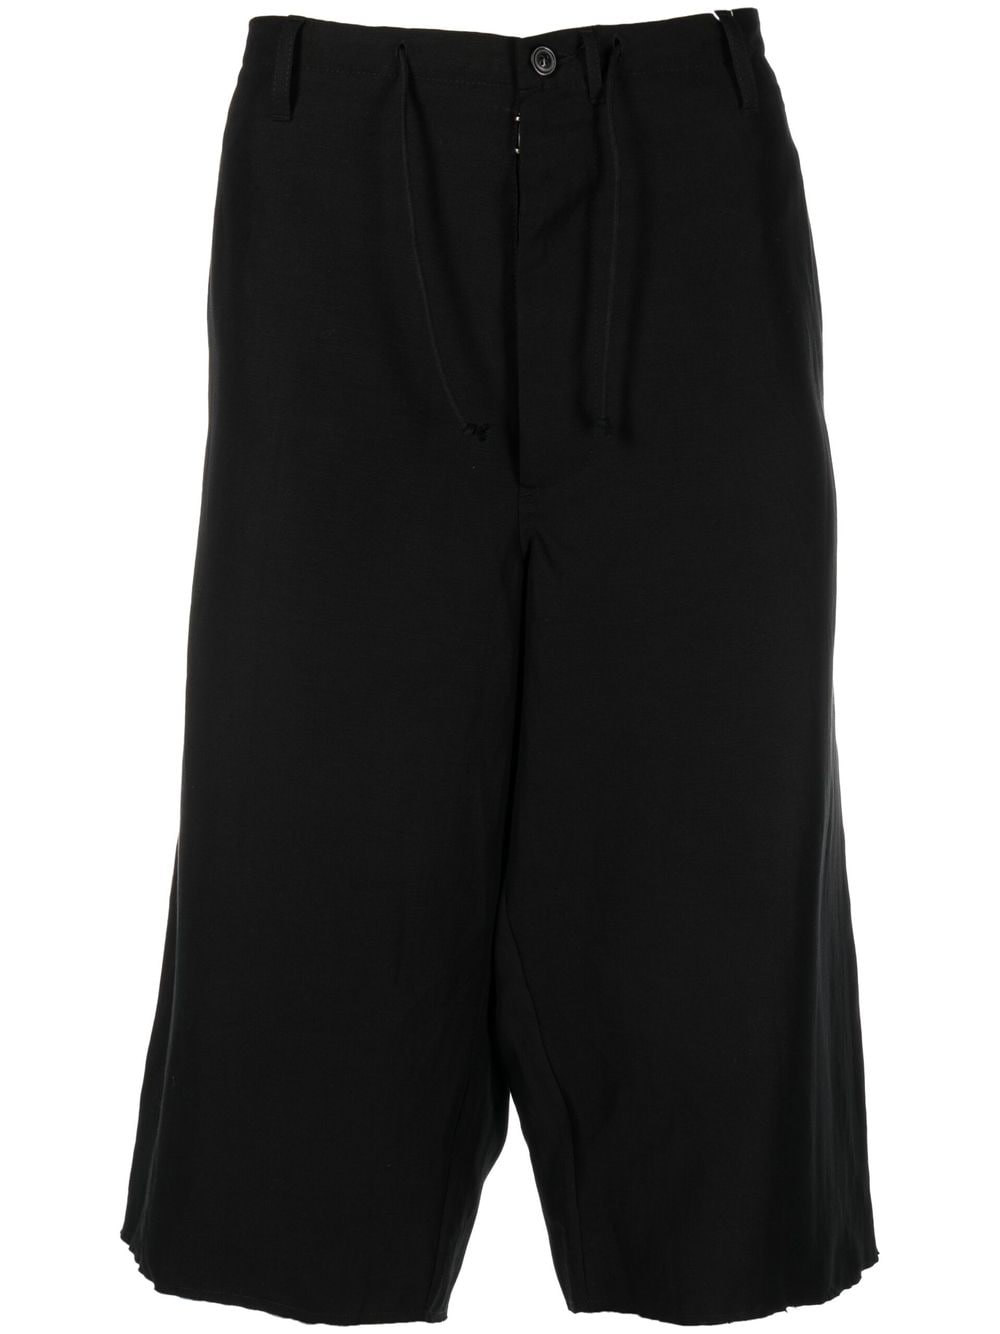 Maison Margiela drop-crotch four-stitch shorts - Black